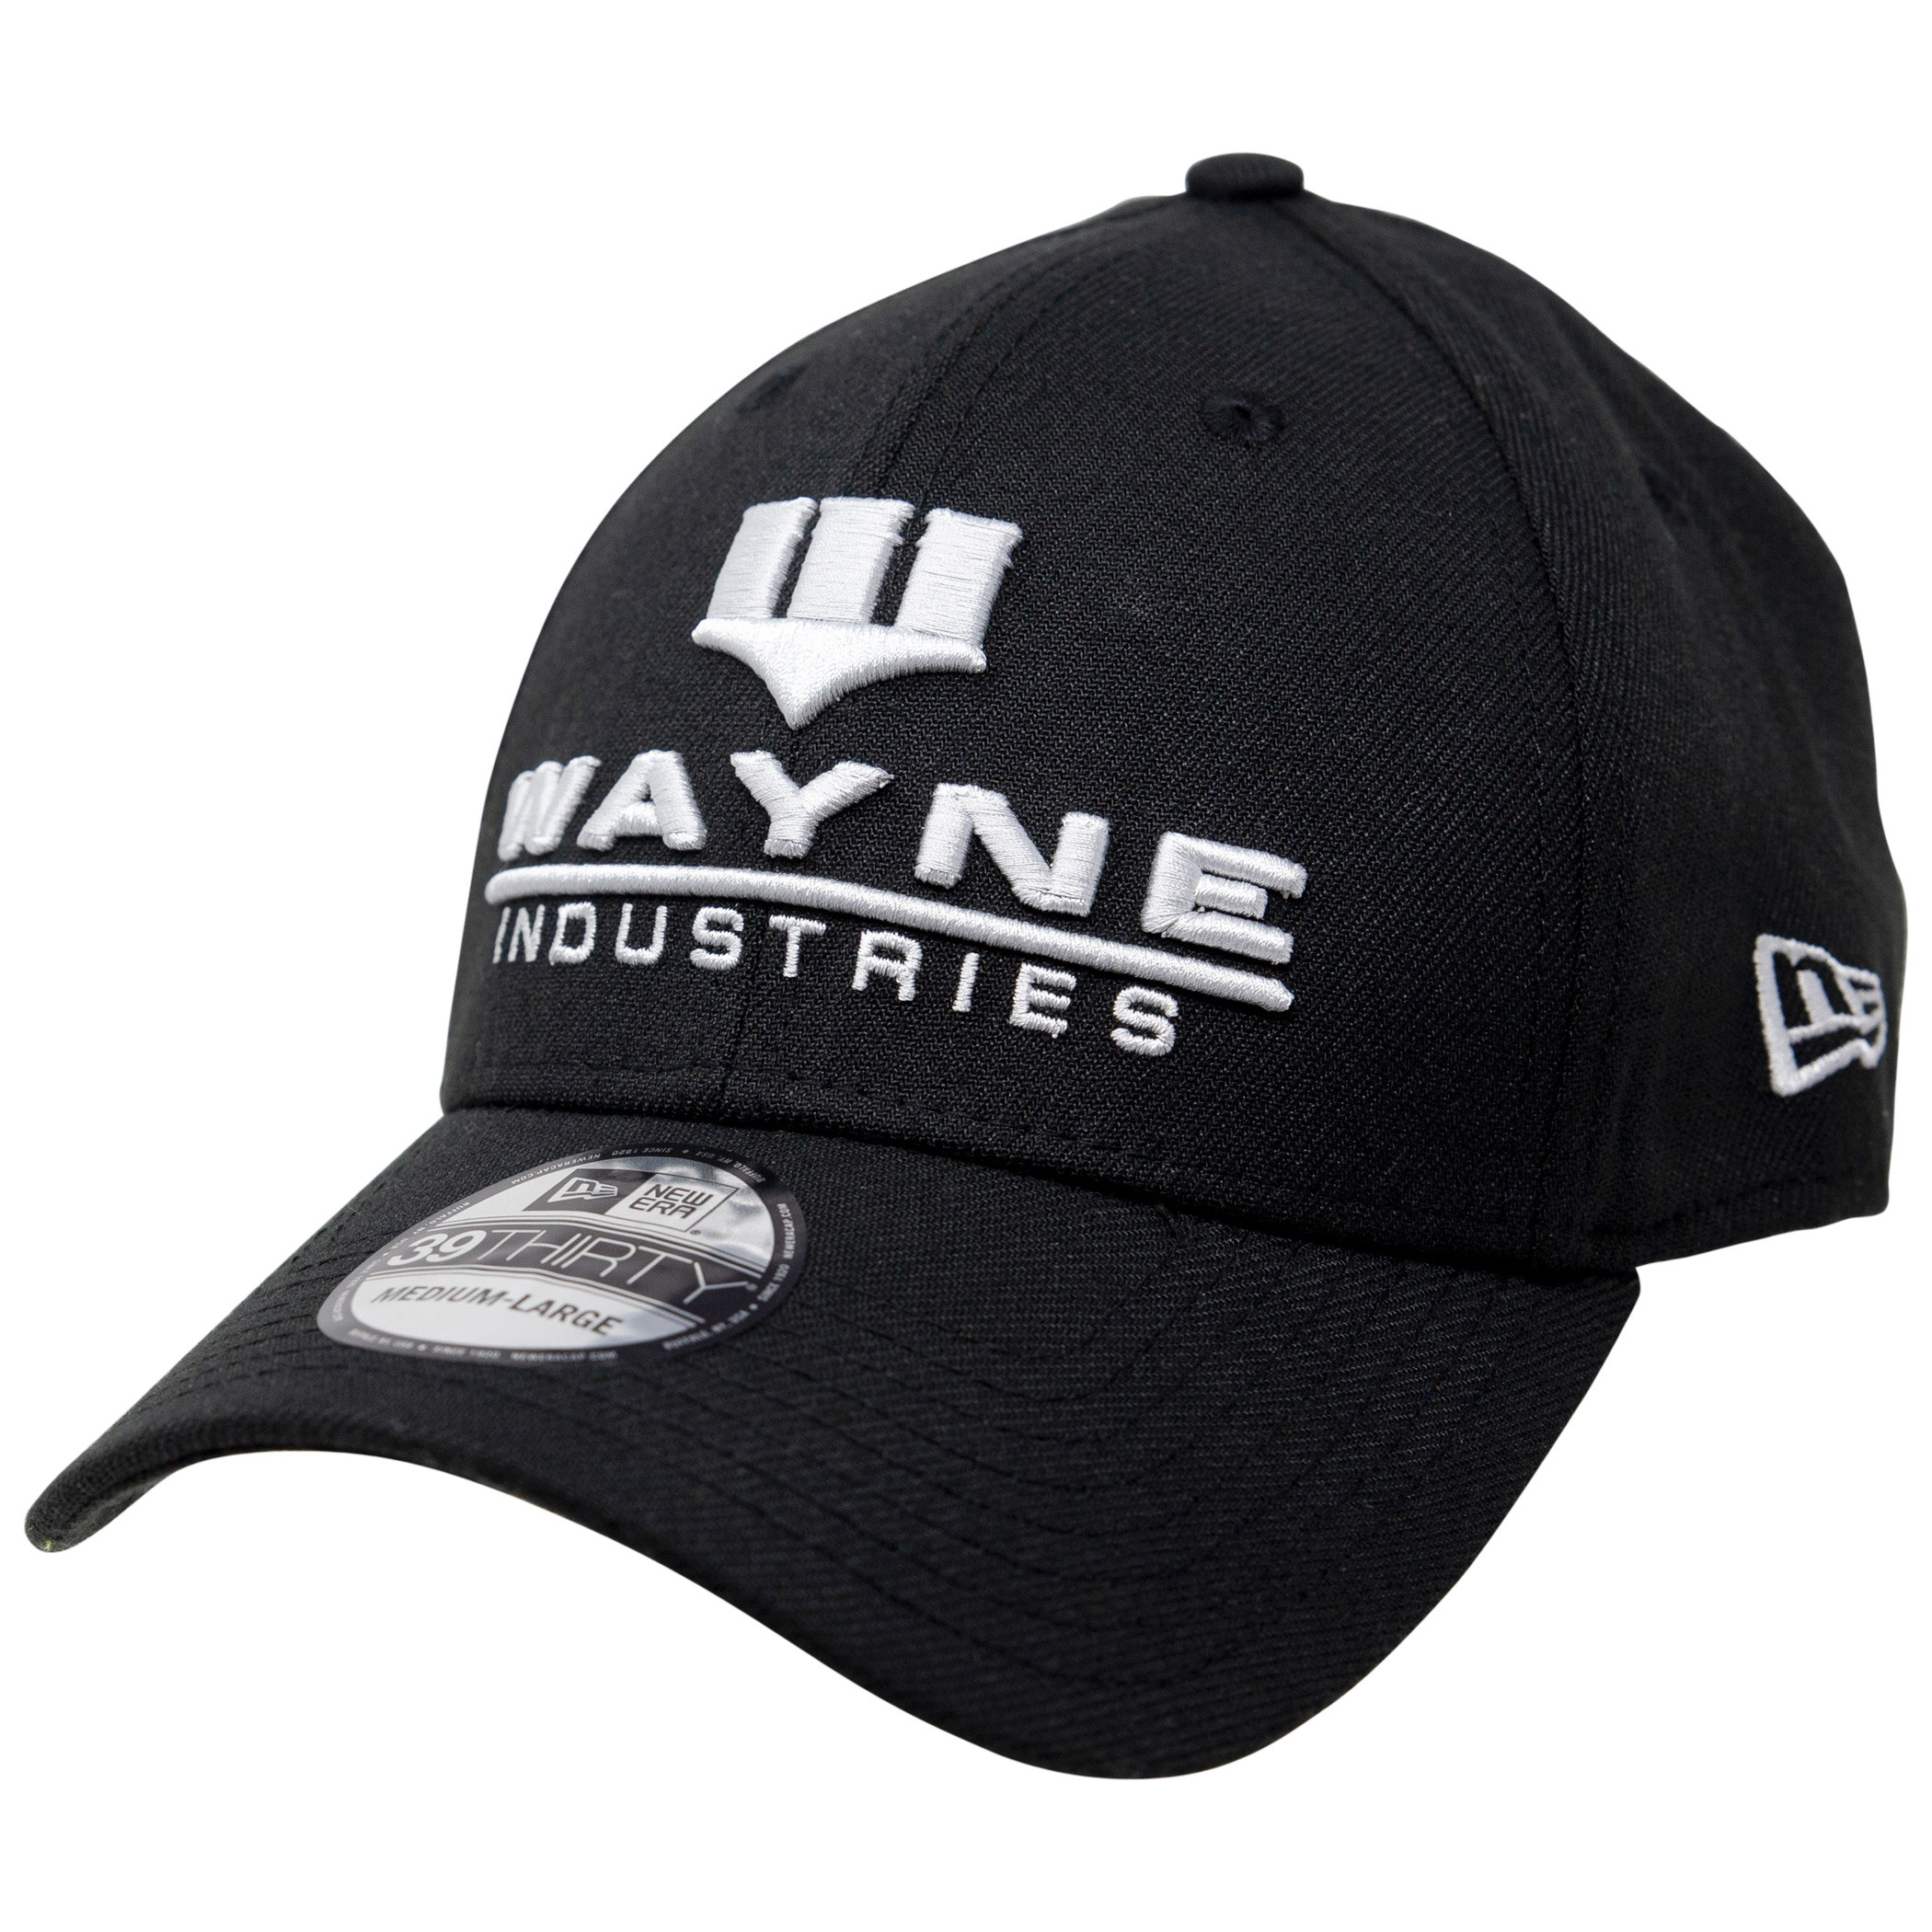 Batman Wayne Industries New Era 39Thirty Fitted Hat